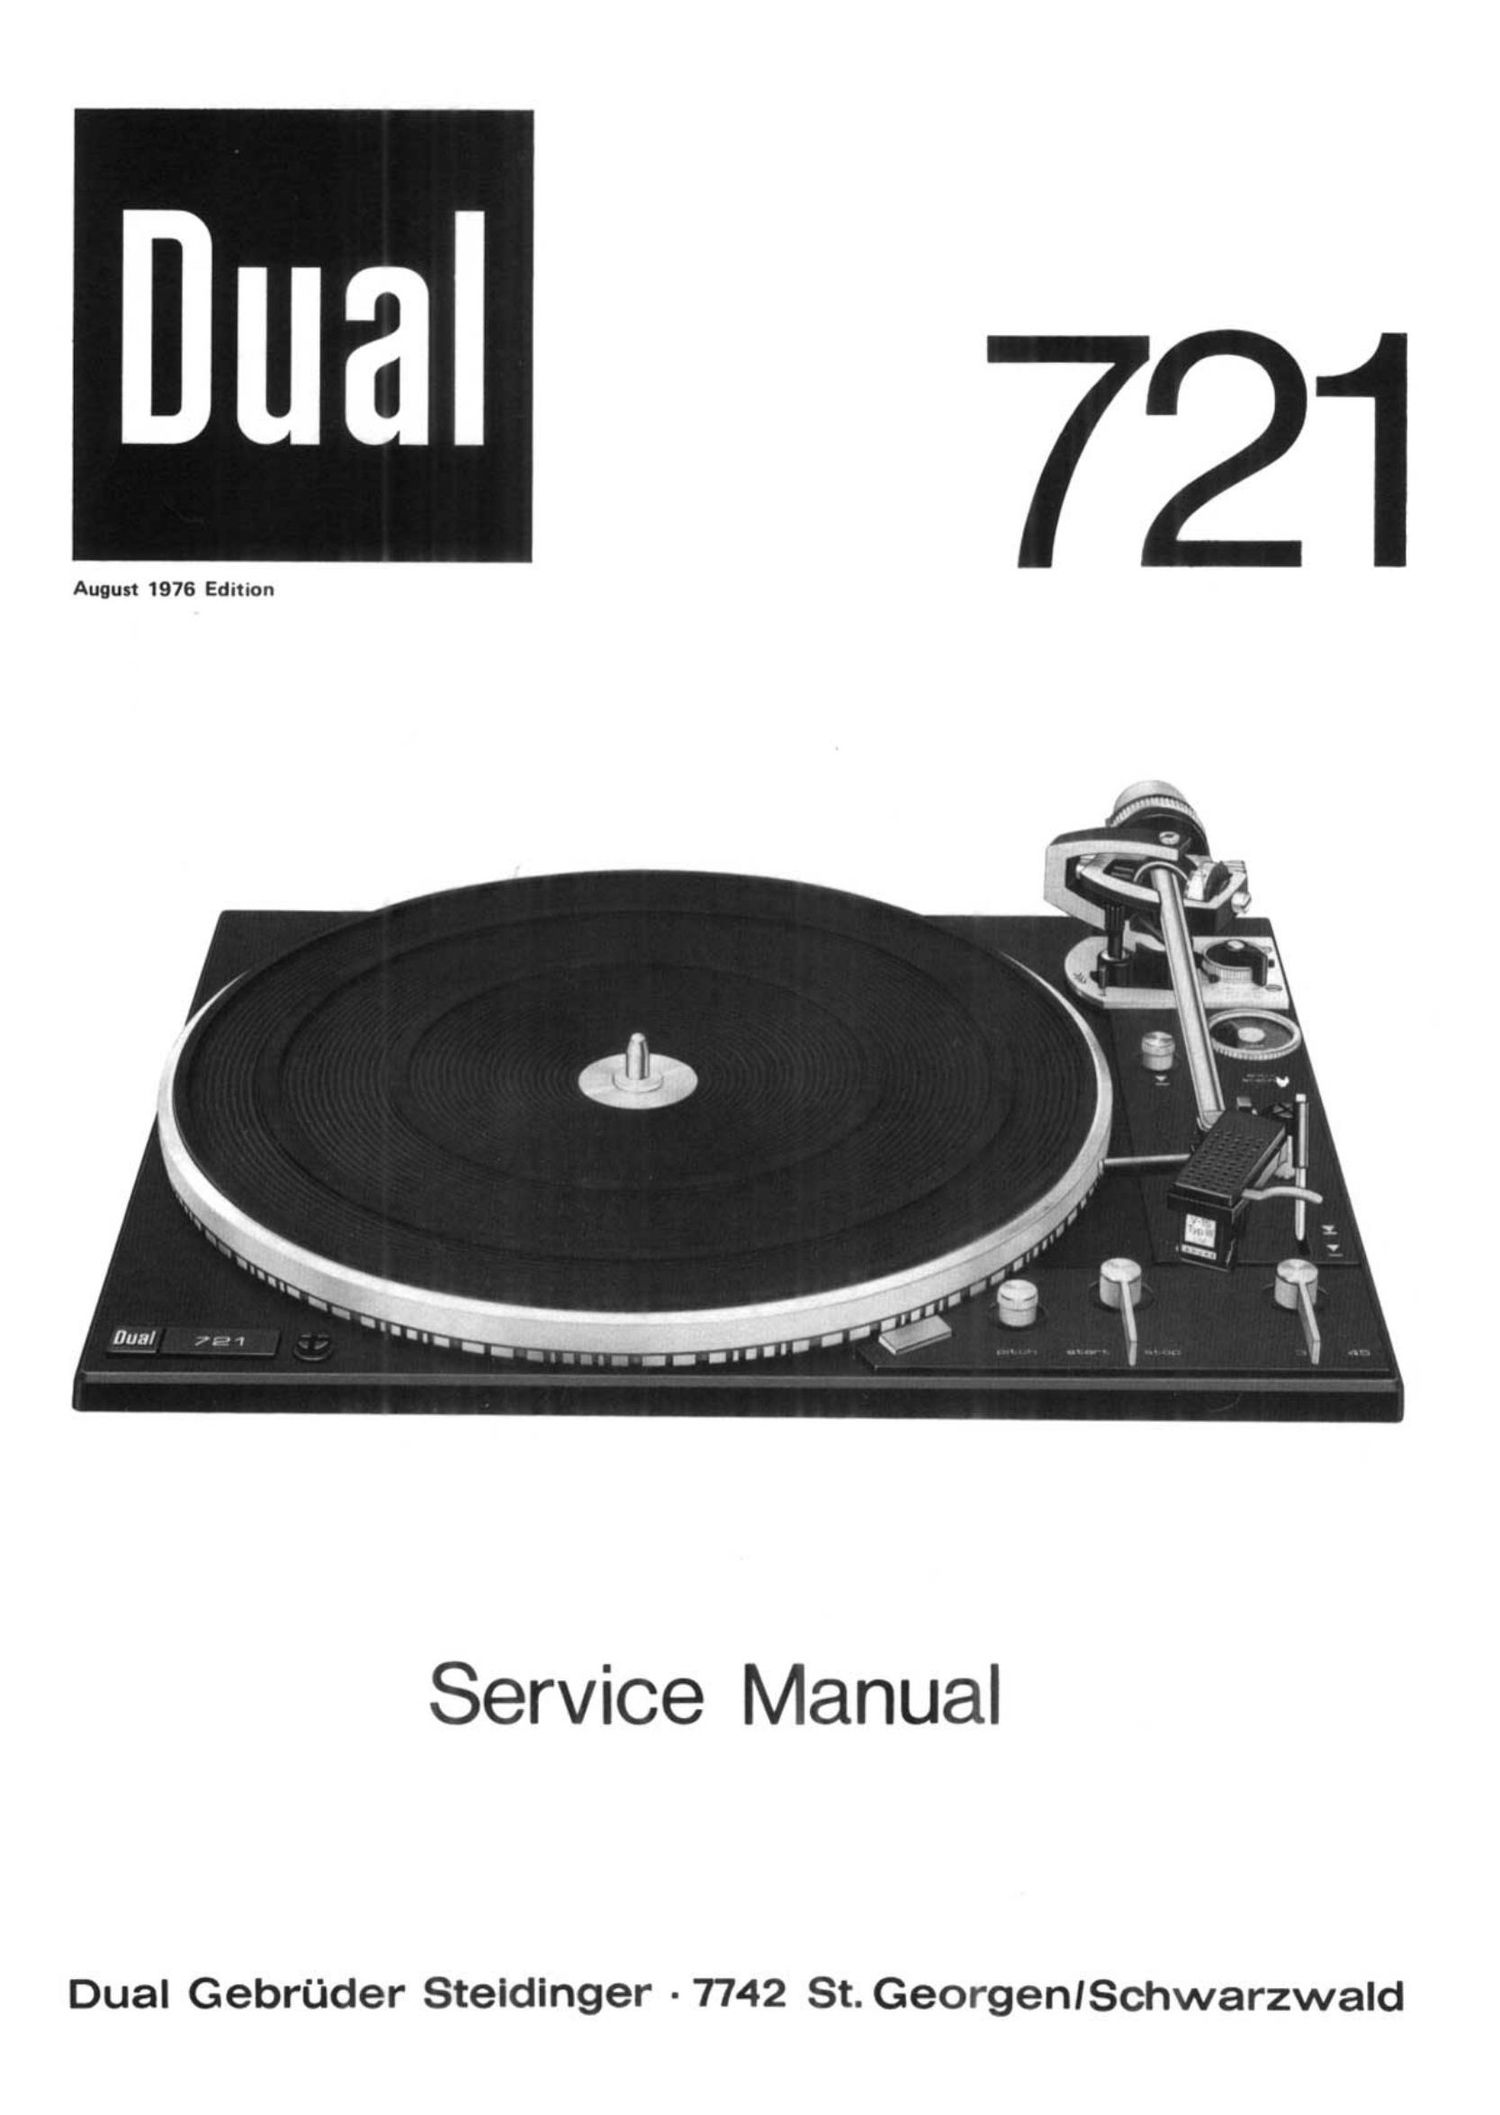 Dual 721 Service Manual 2